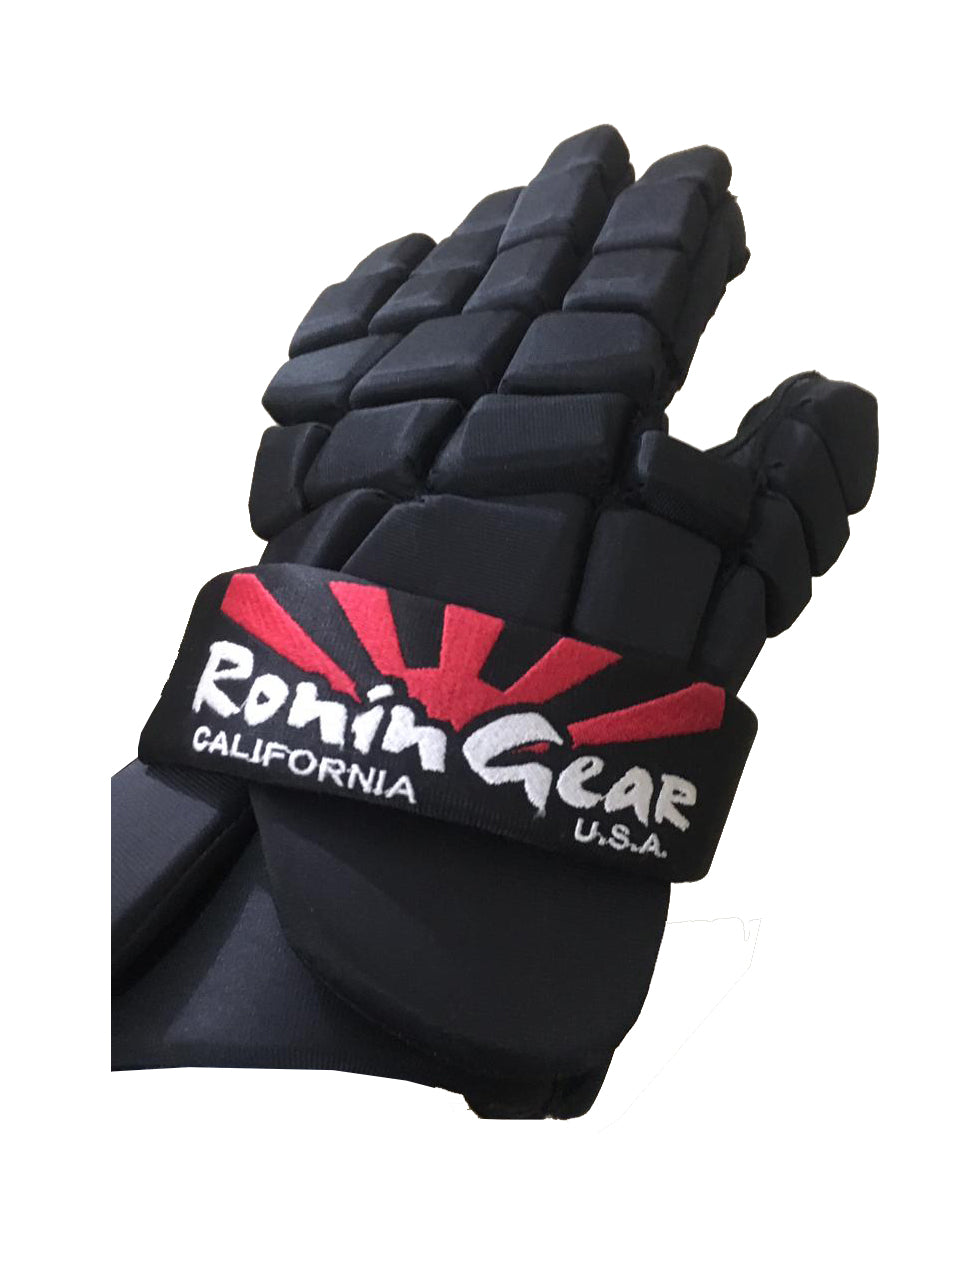 Ronin Gear Escrima Kali Arnis Stickfighting Sparring Gloves